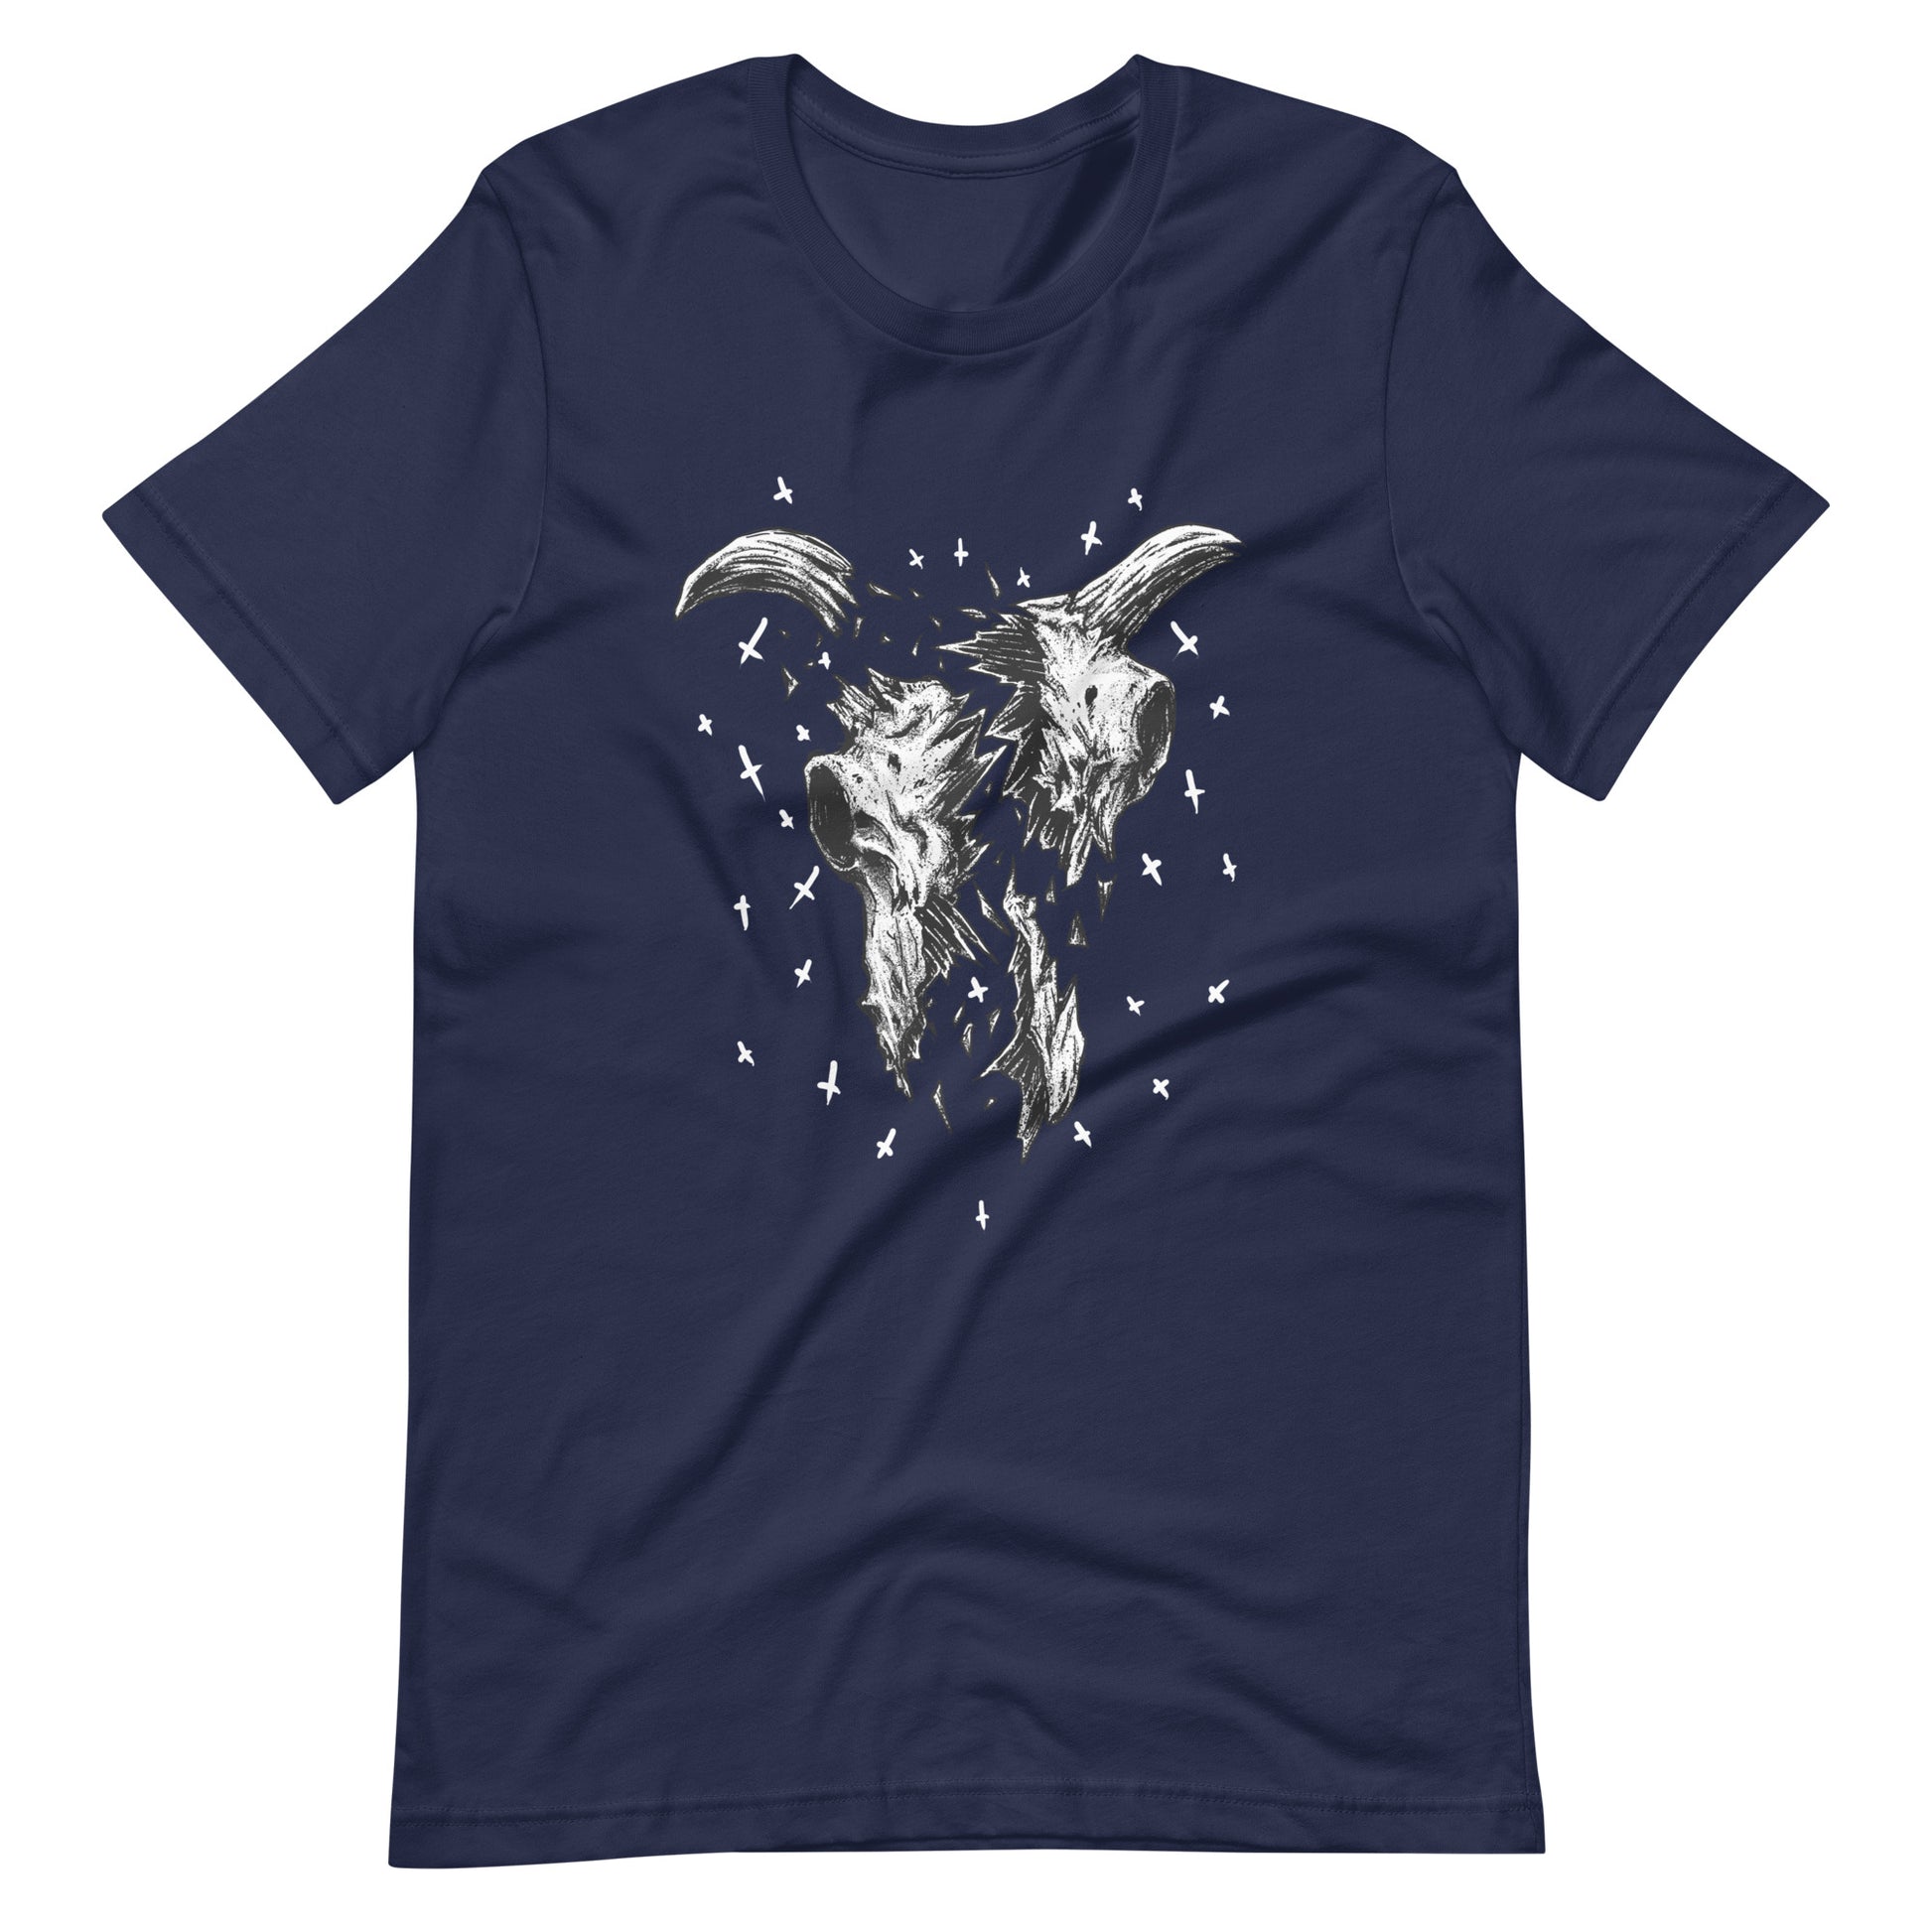 Crushed - Men's t-shirt - Navy Front